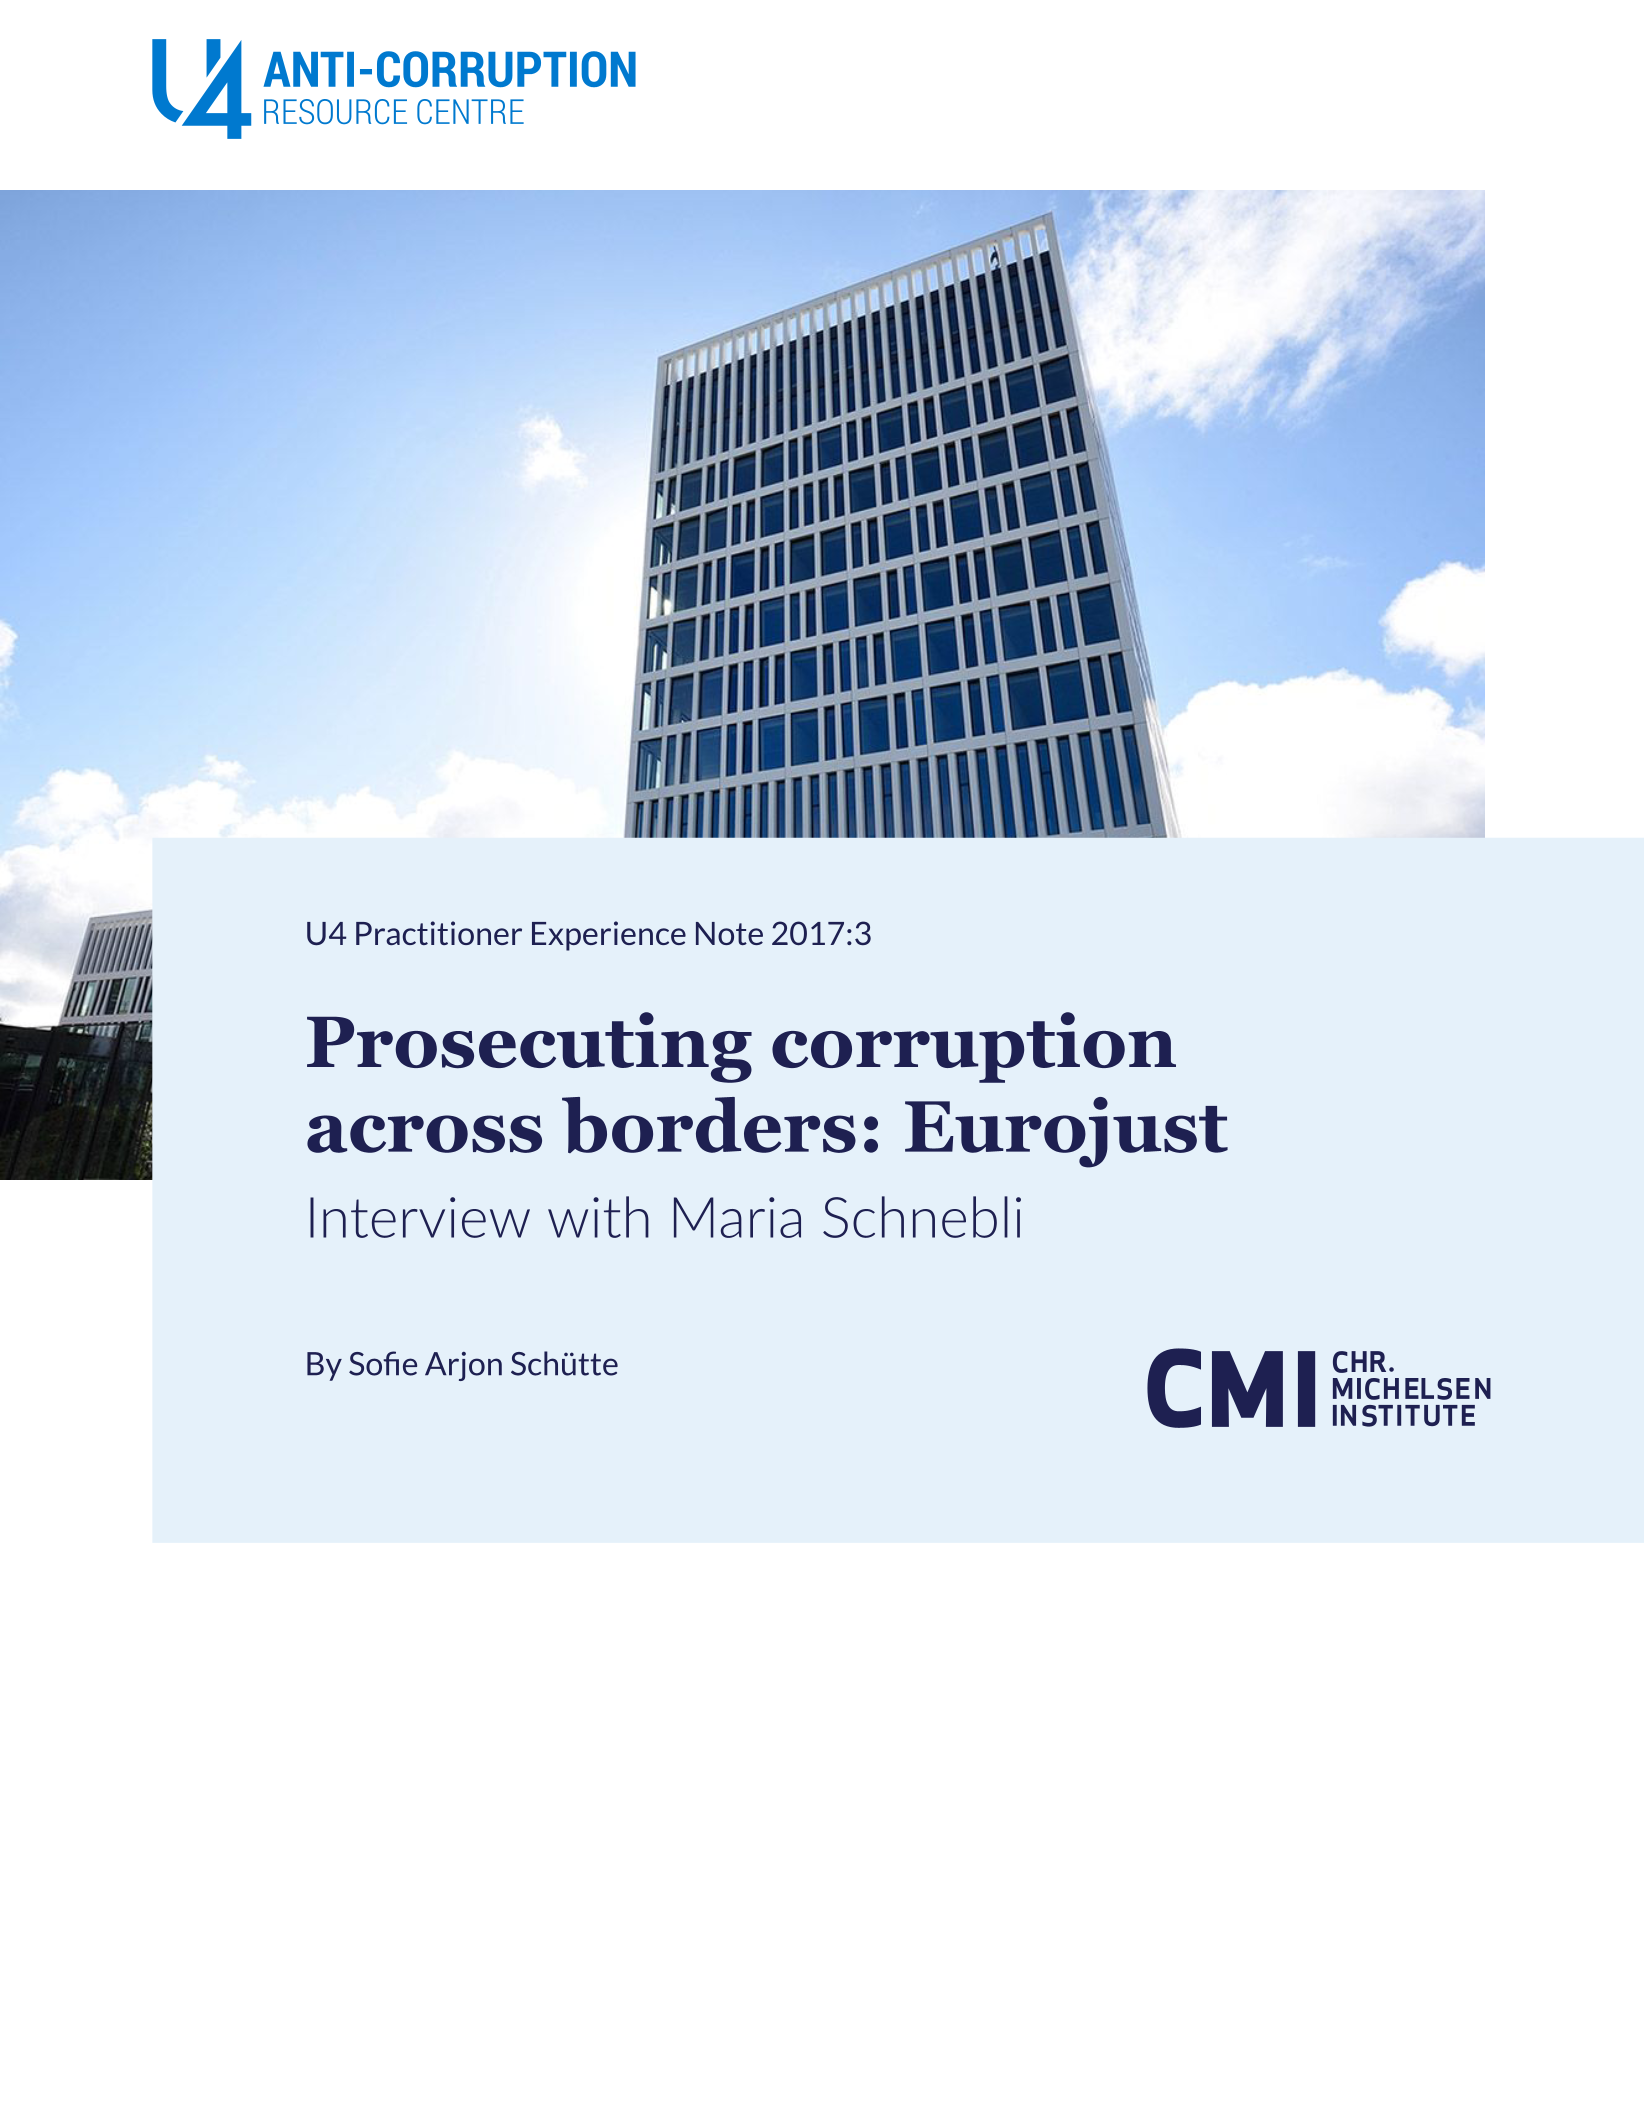 Prosecuting corruption across borders: Eurojust